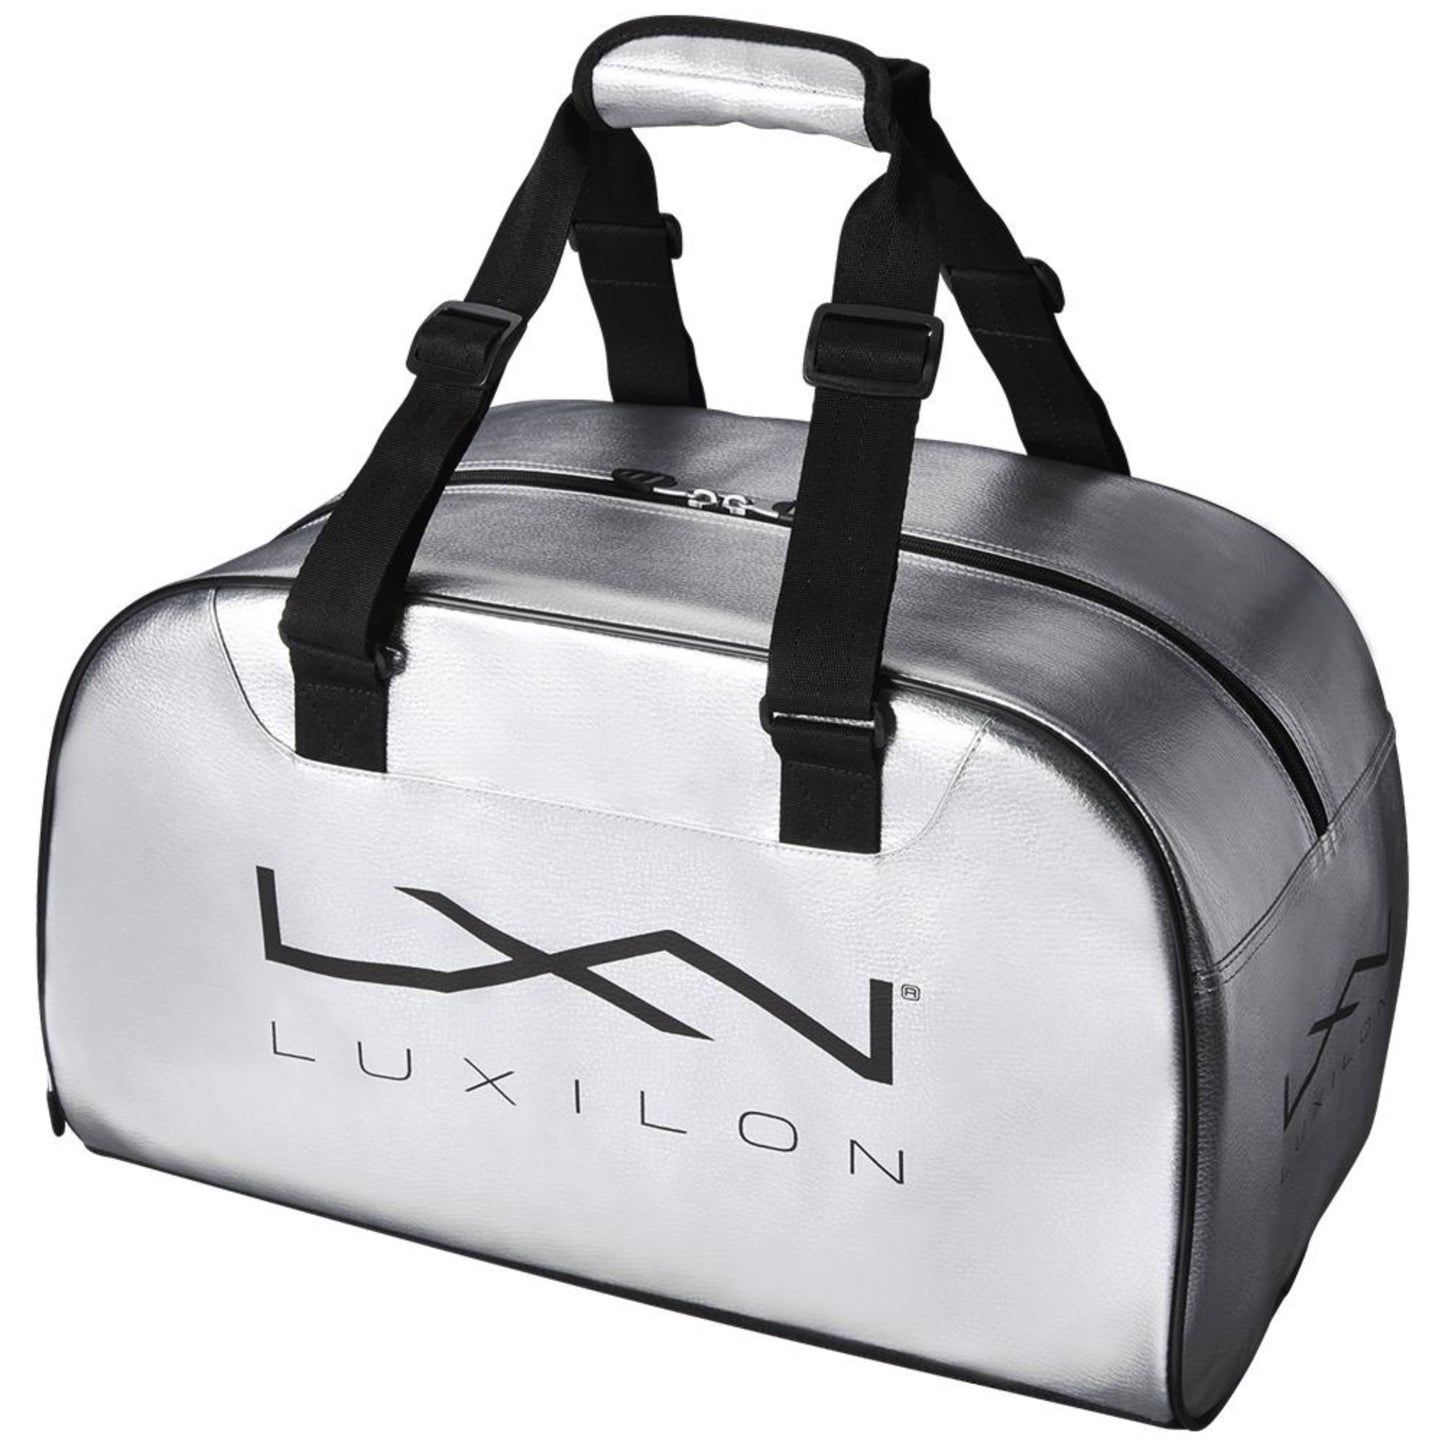 Luxilon Small Duffel bag